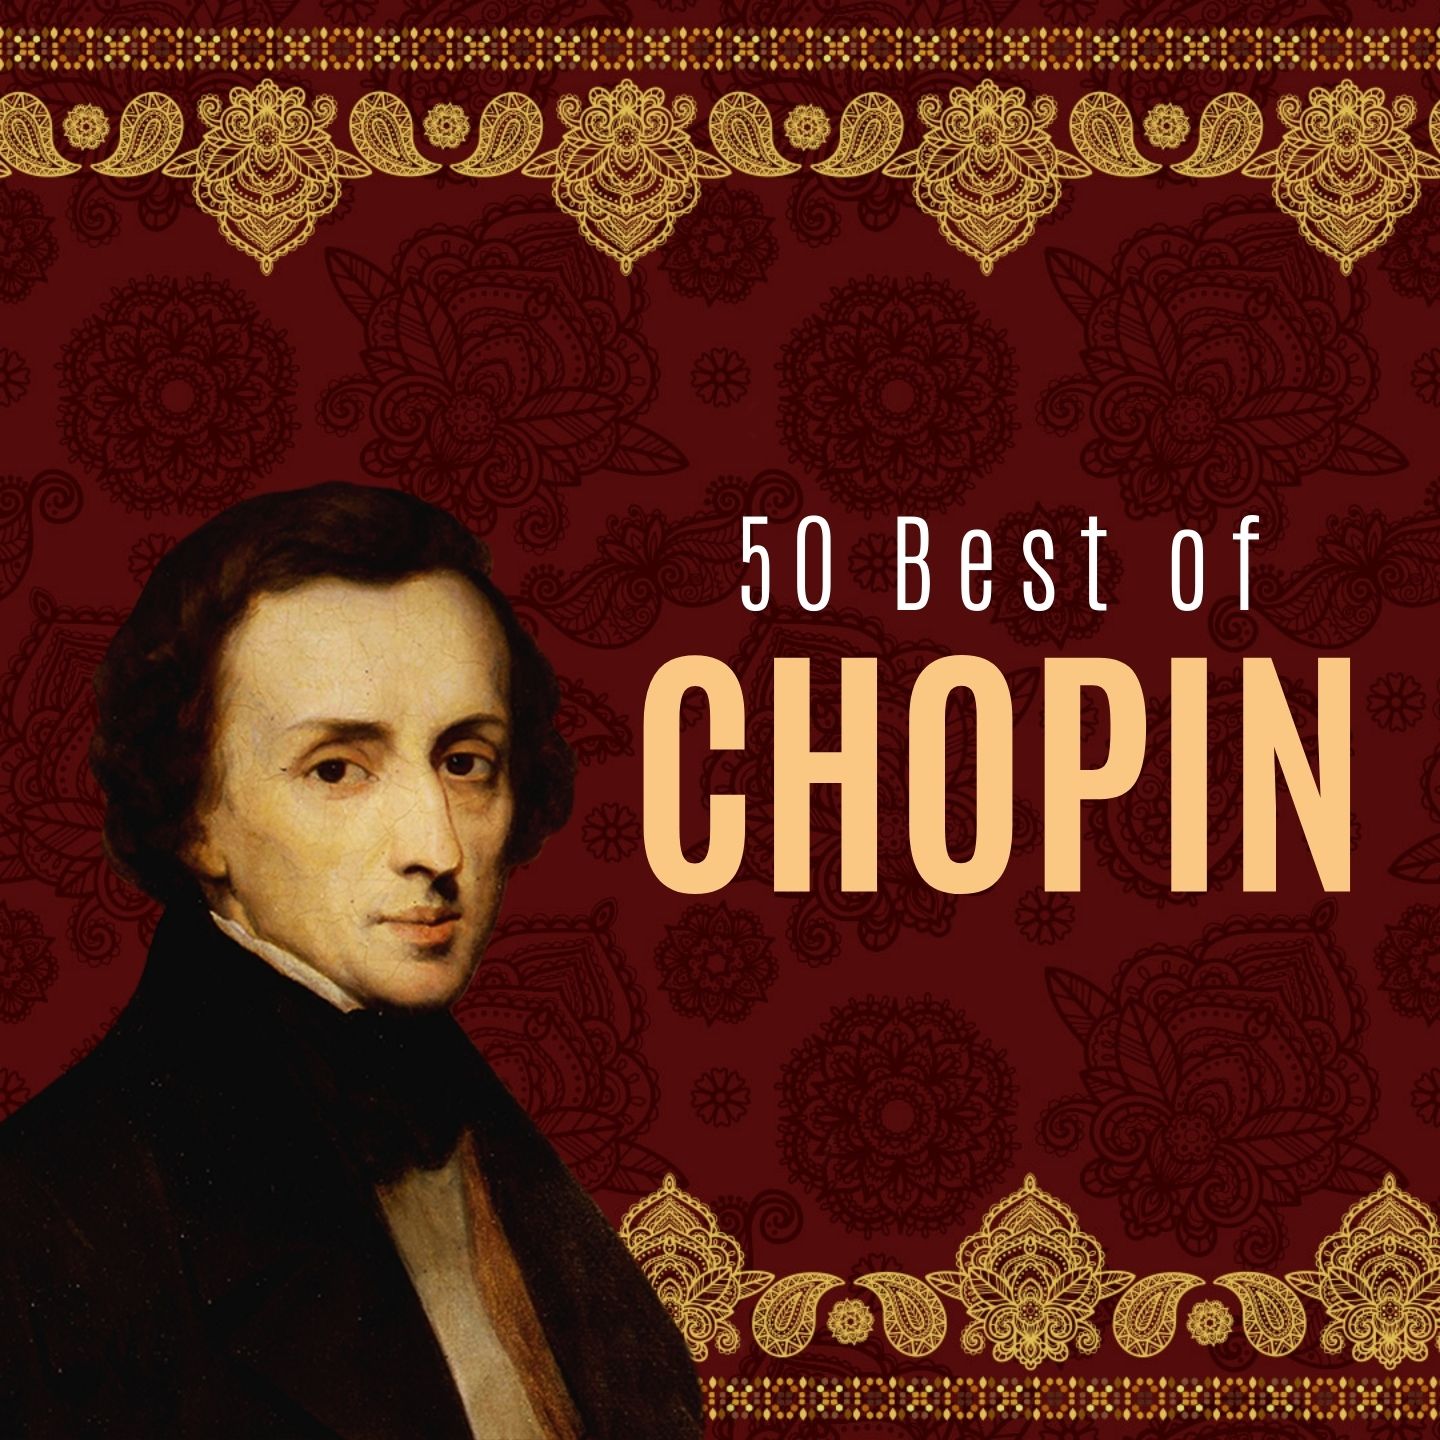 50 Best of Chopin